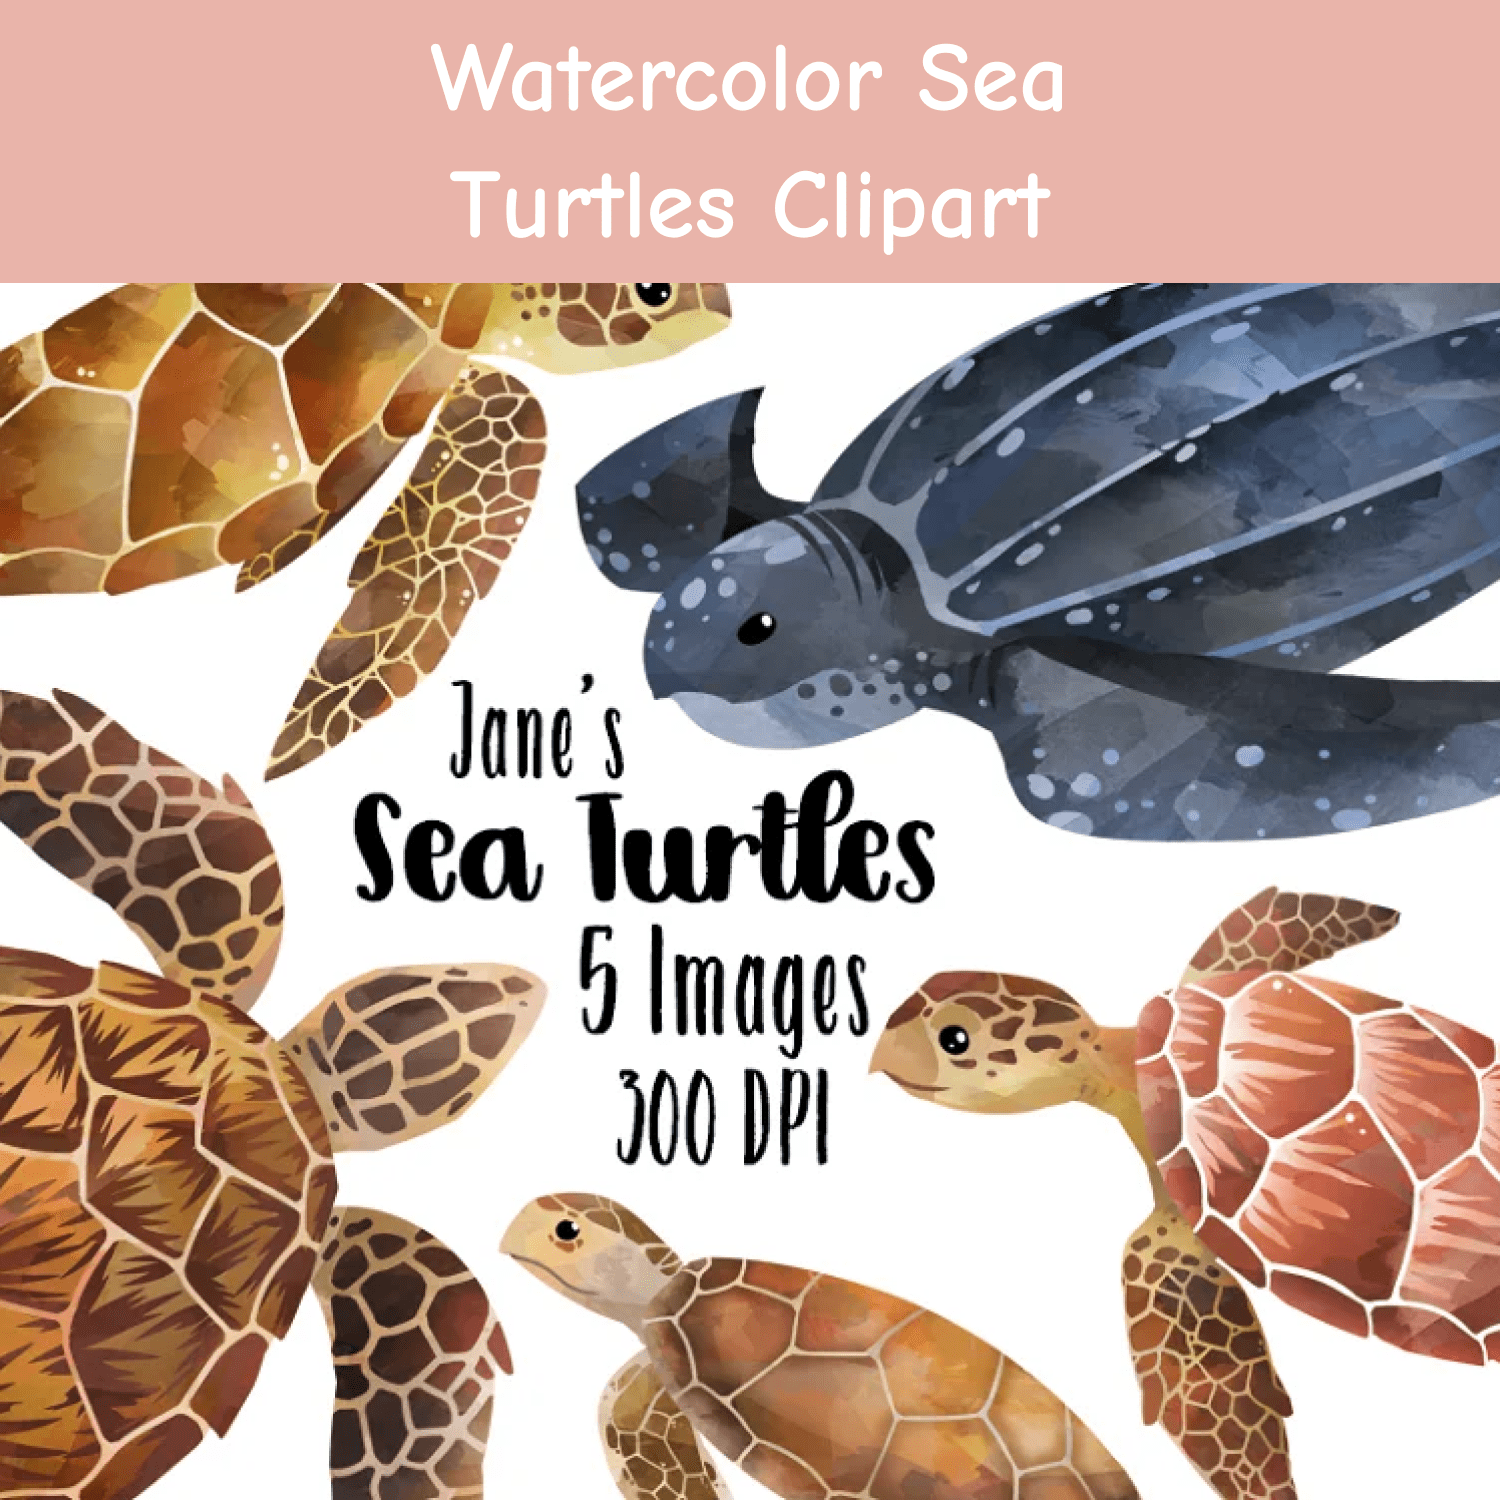 Watercolor Sea Turtles Clipart cover.